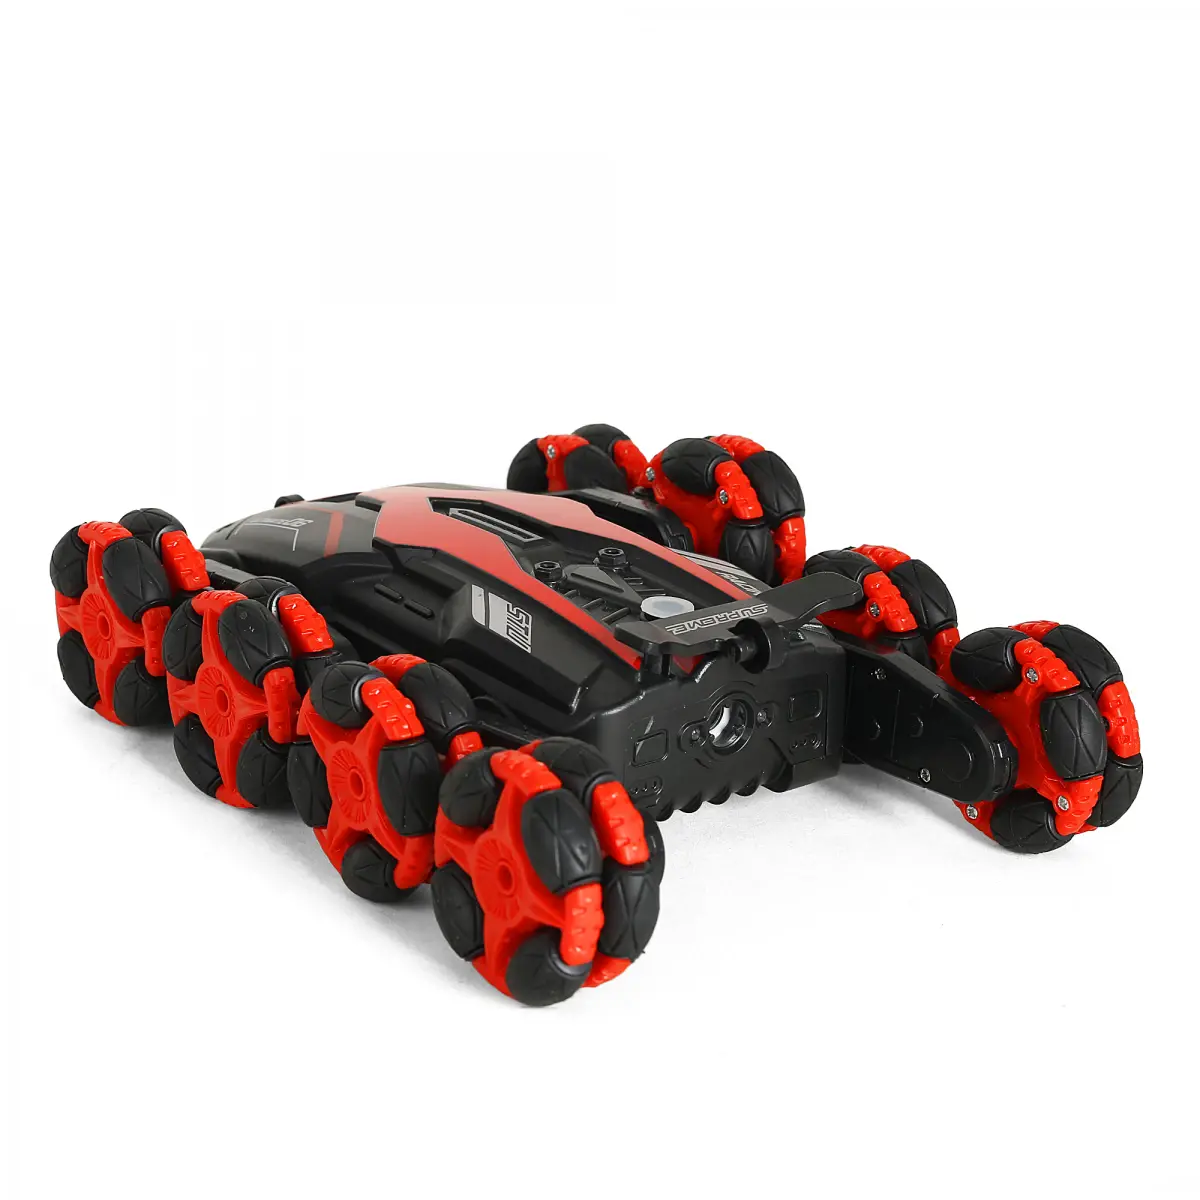 Ralleyz Spider Laser Wheel Spraying Stunt Car, Remote Control Toys, 6Y+, Black & Red